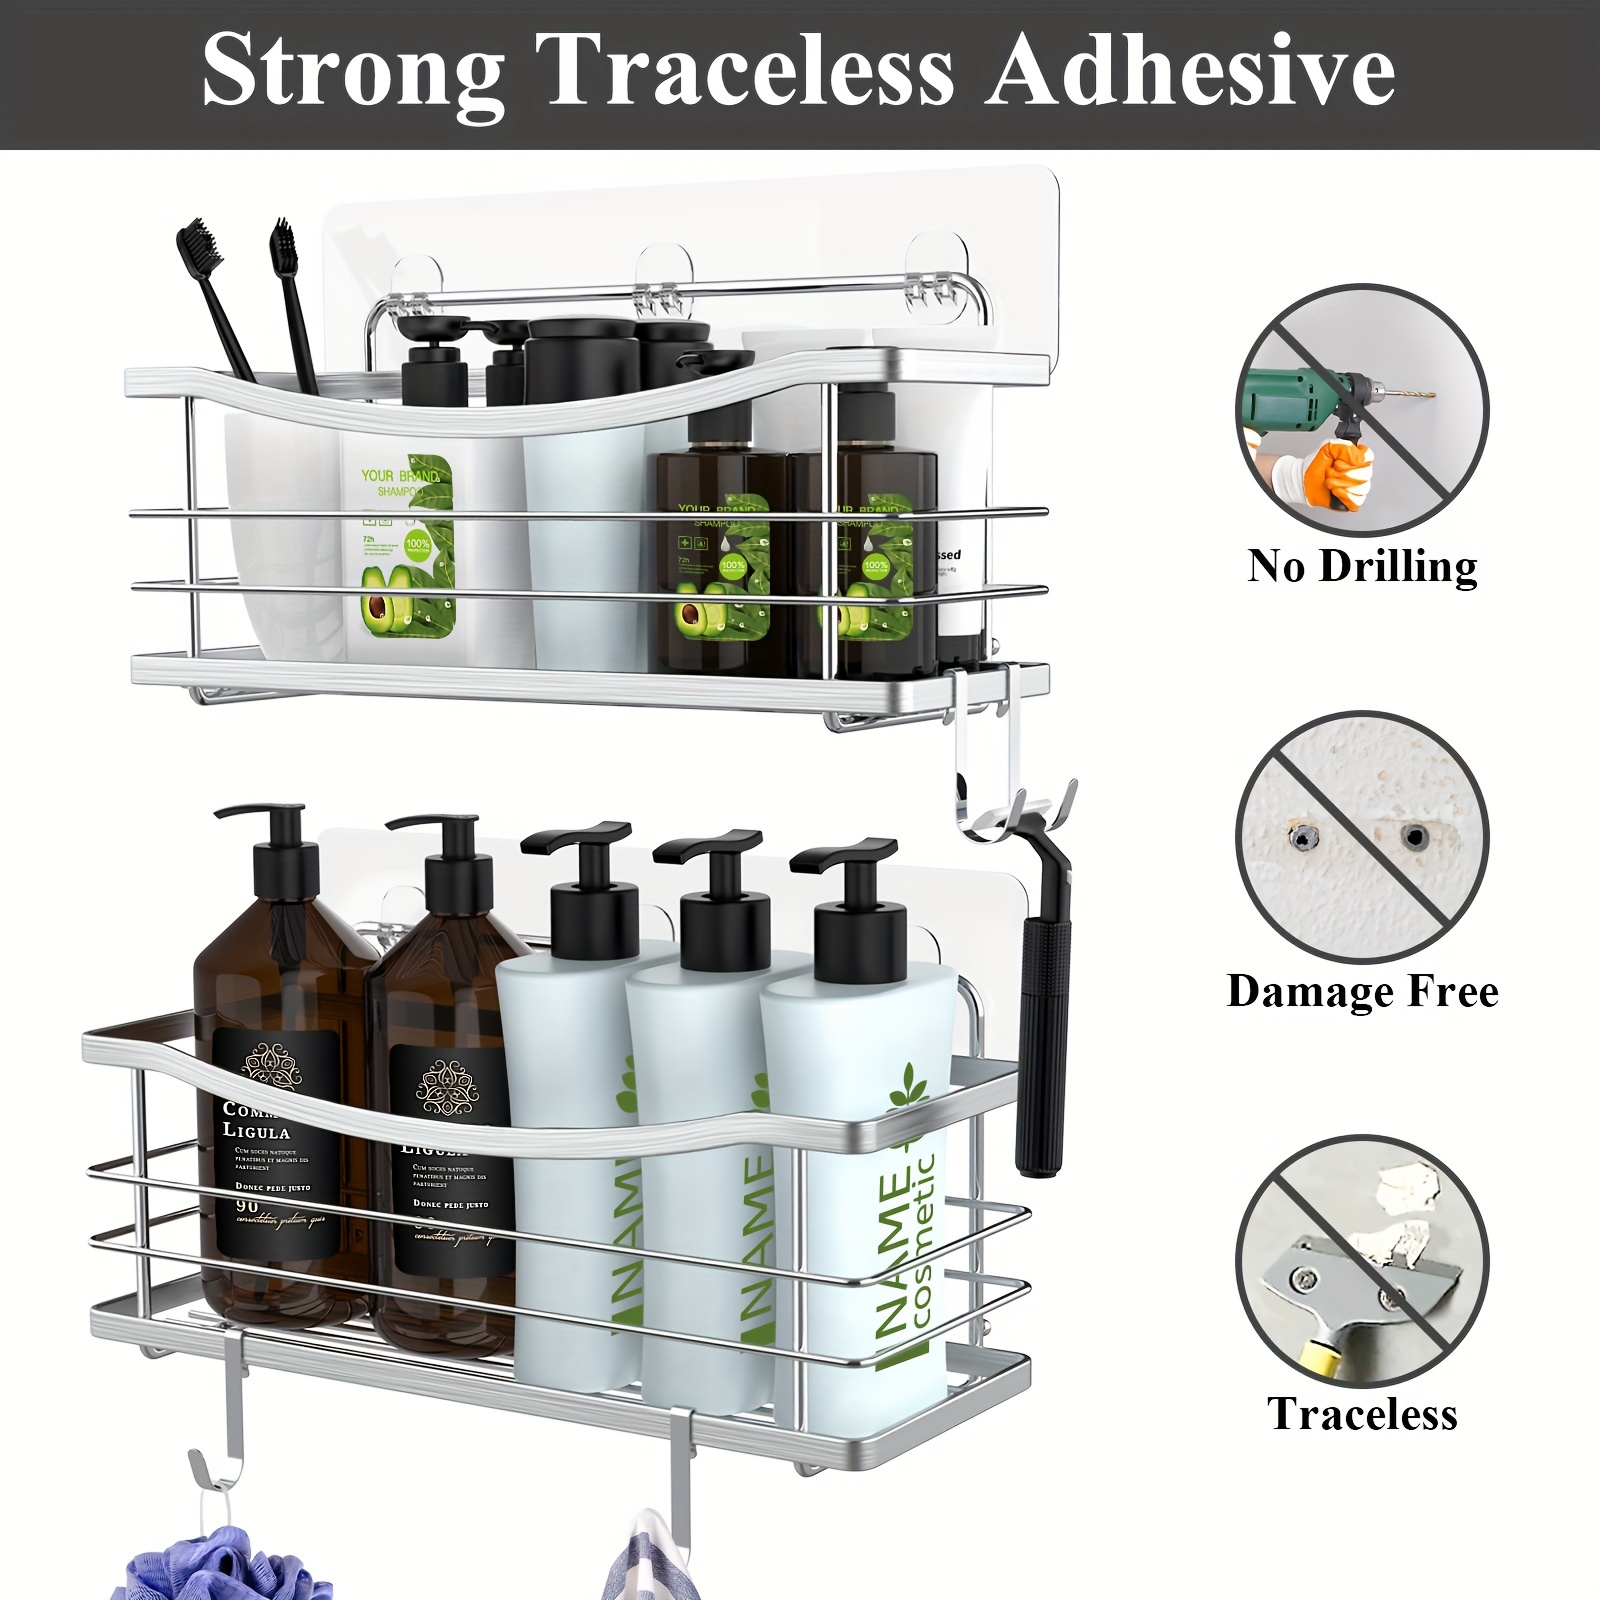 Stainless Steel Shower Gel Hanging Holder Self-Adhesive Shampoo